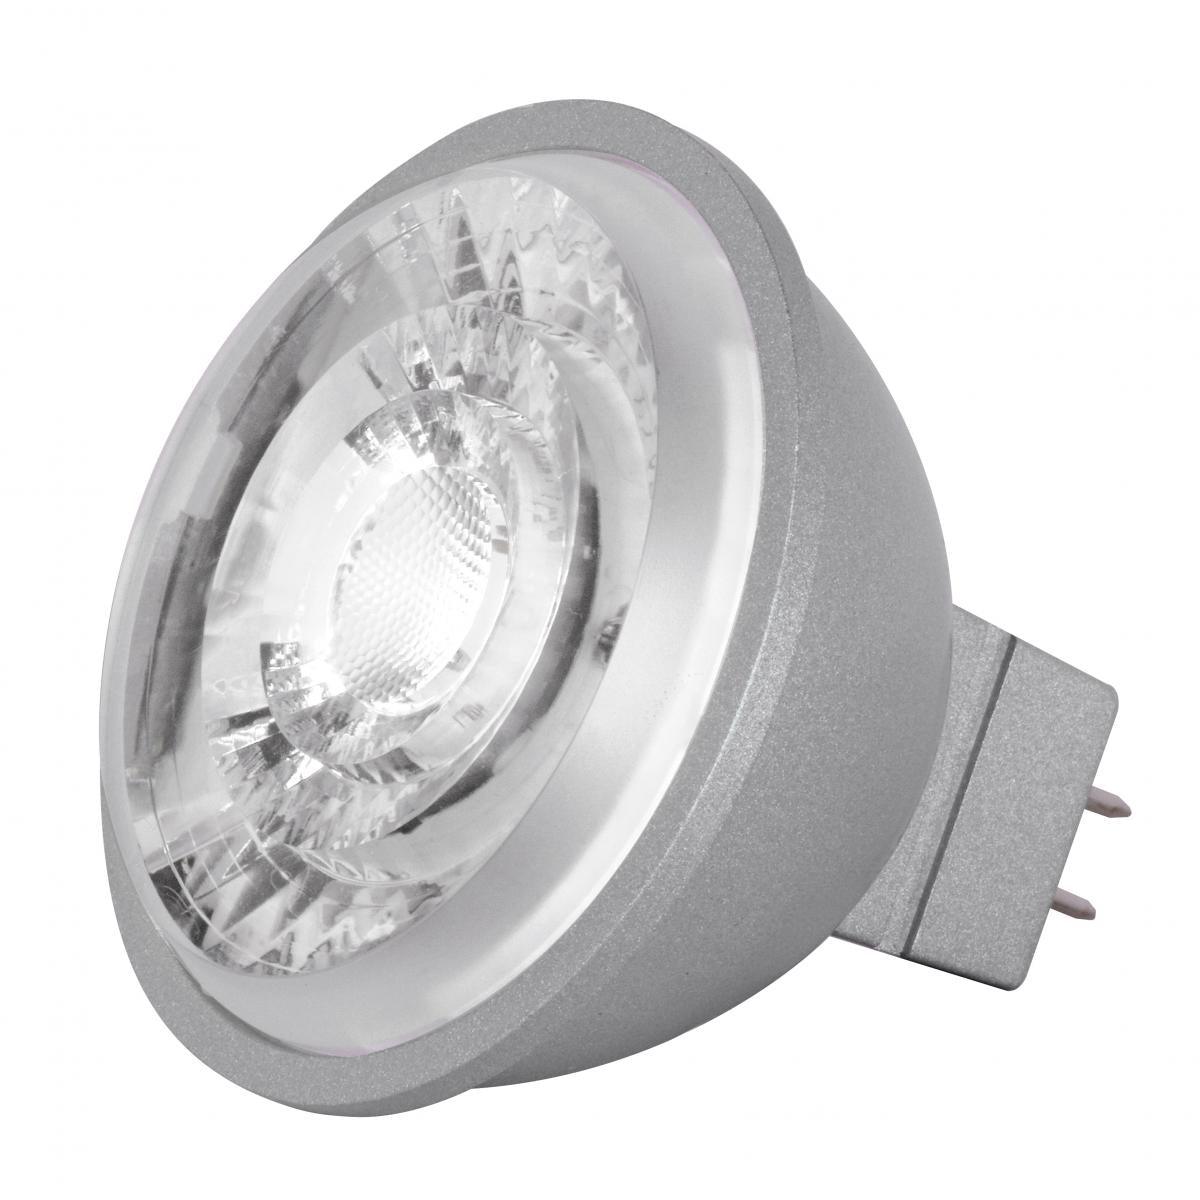 MR16 Reflector LED bulb, 8 watt, 490 Lumens, 3000K, GU5.3 Base, 15 Deg. Spot